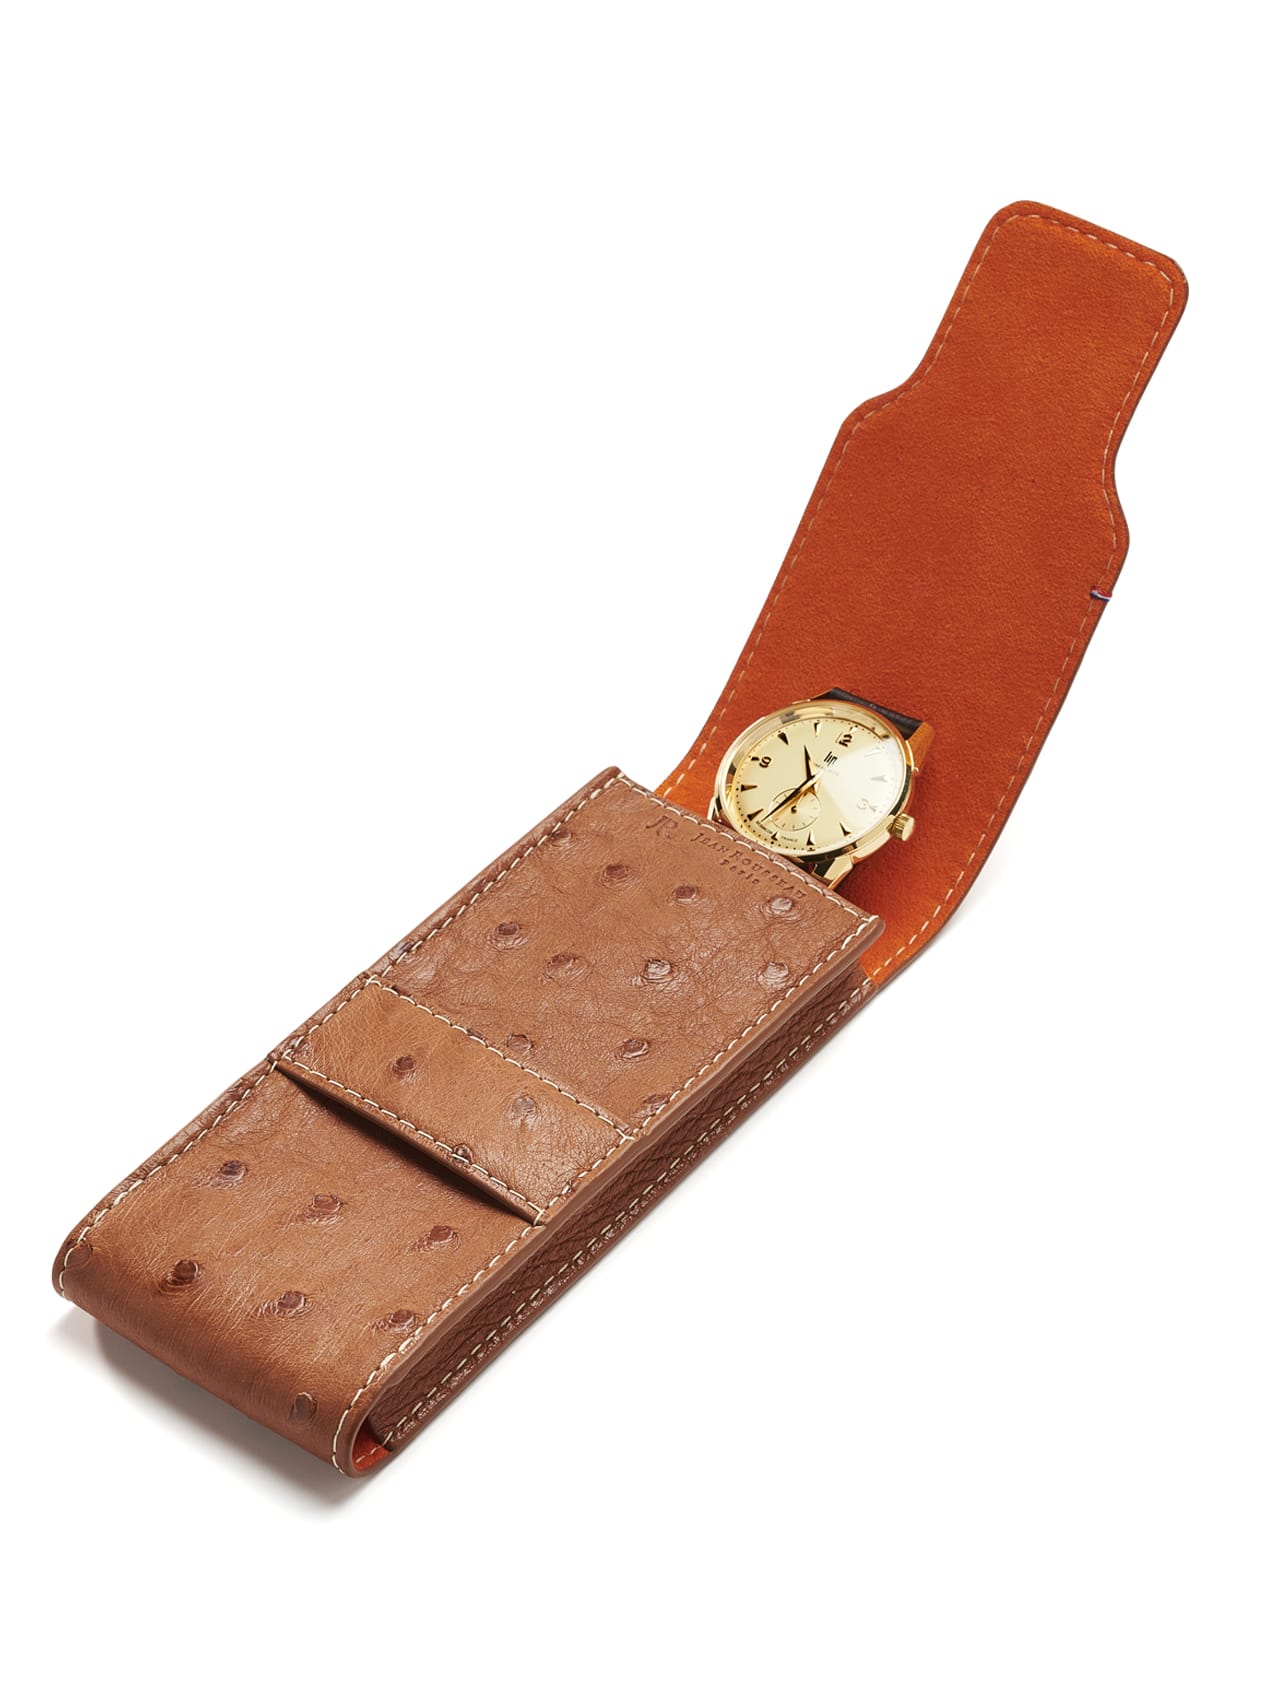 jean rousseau leather goods watch case brown orange